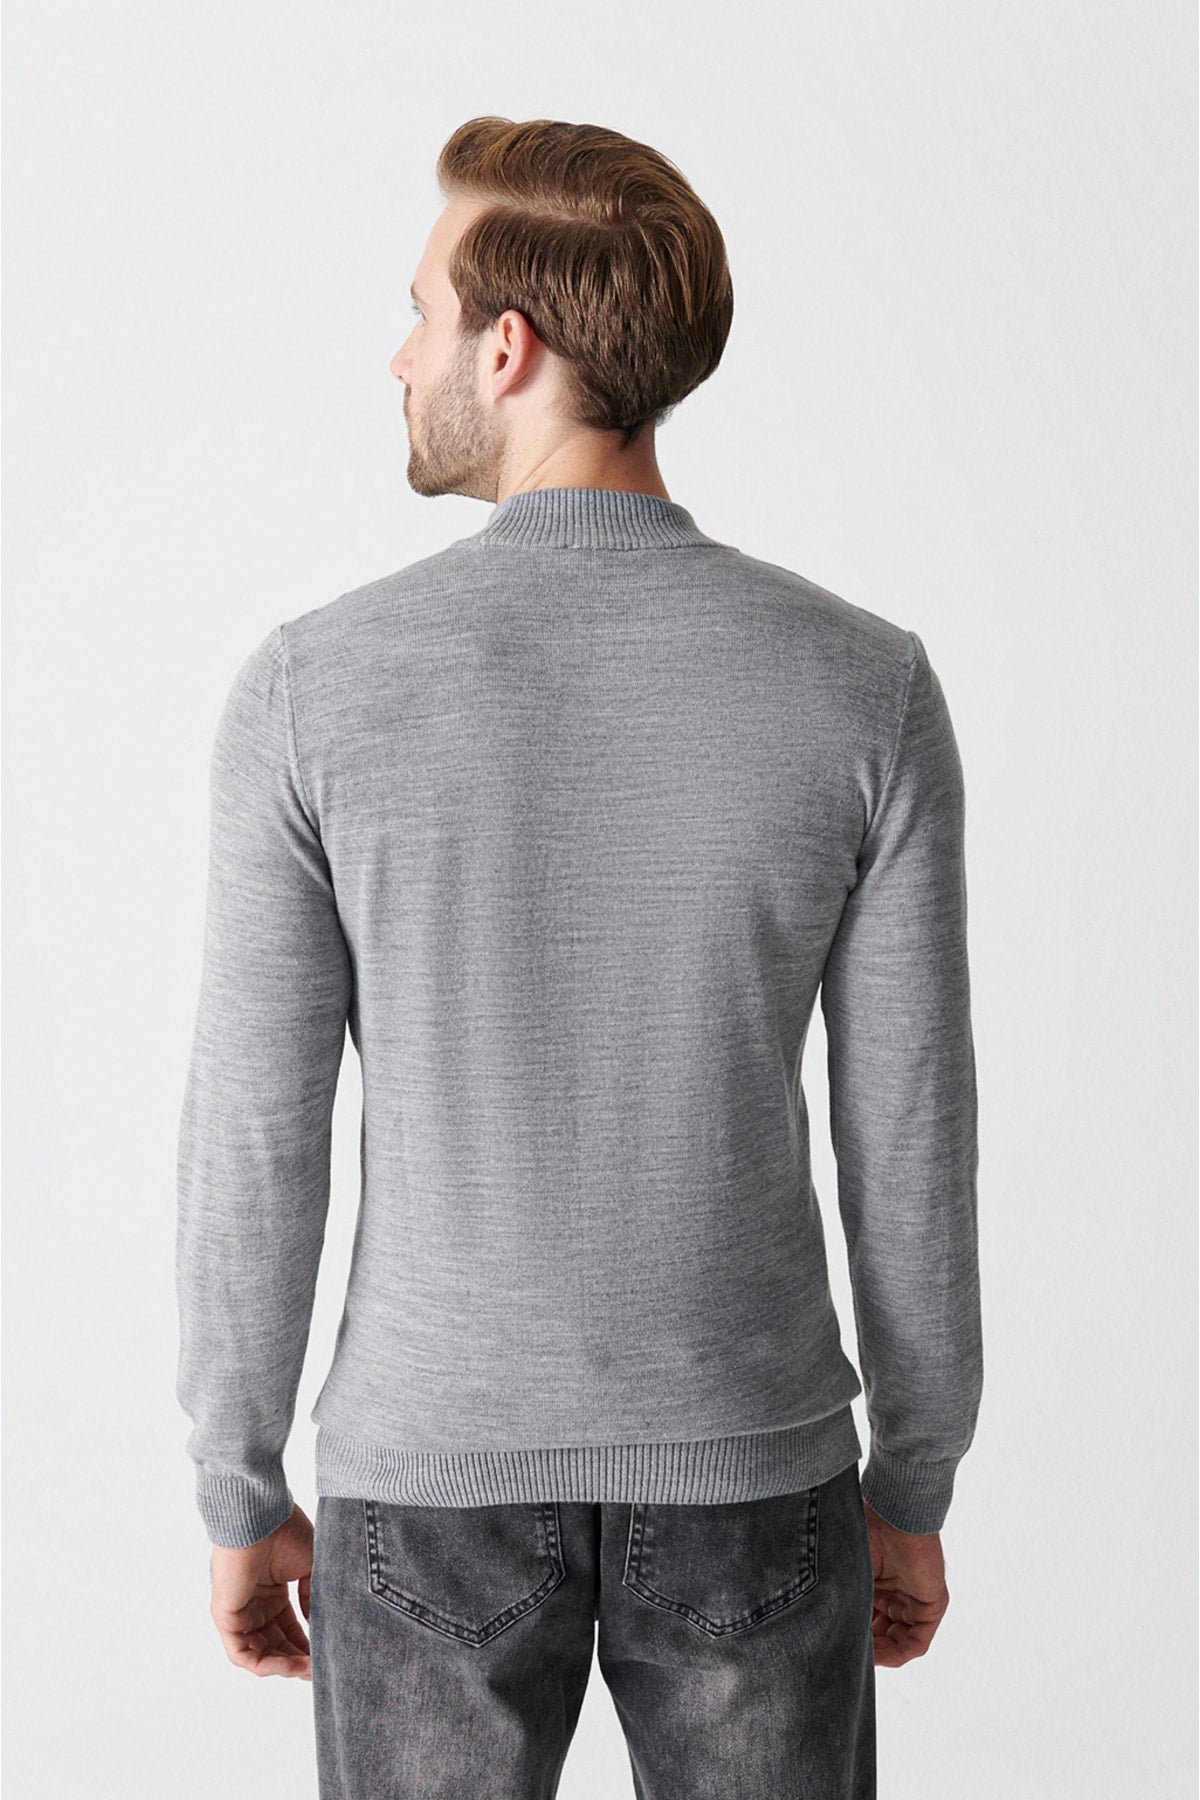 Unisex Gray Half Fisherman Neck Fifty Knitwear Sweater E005001